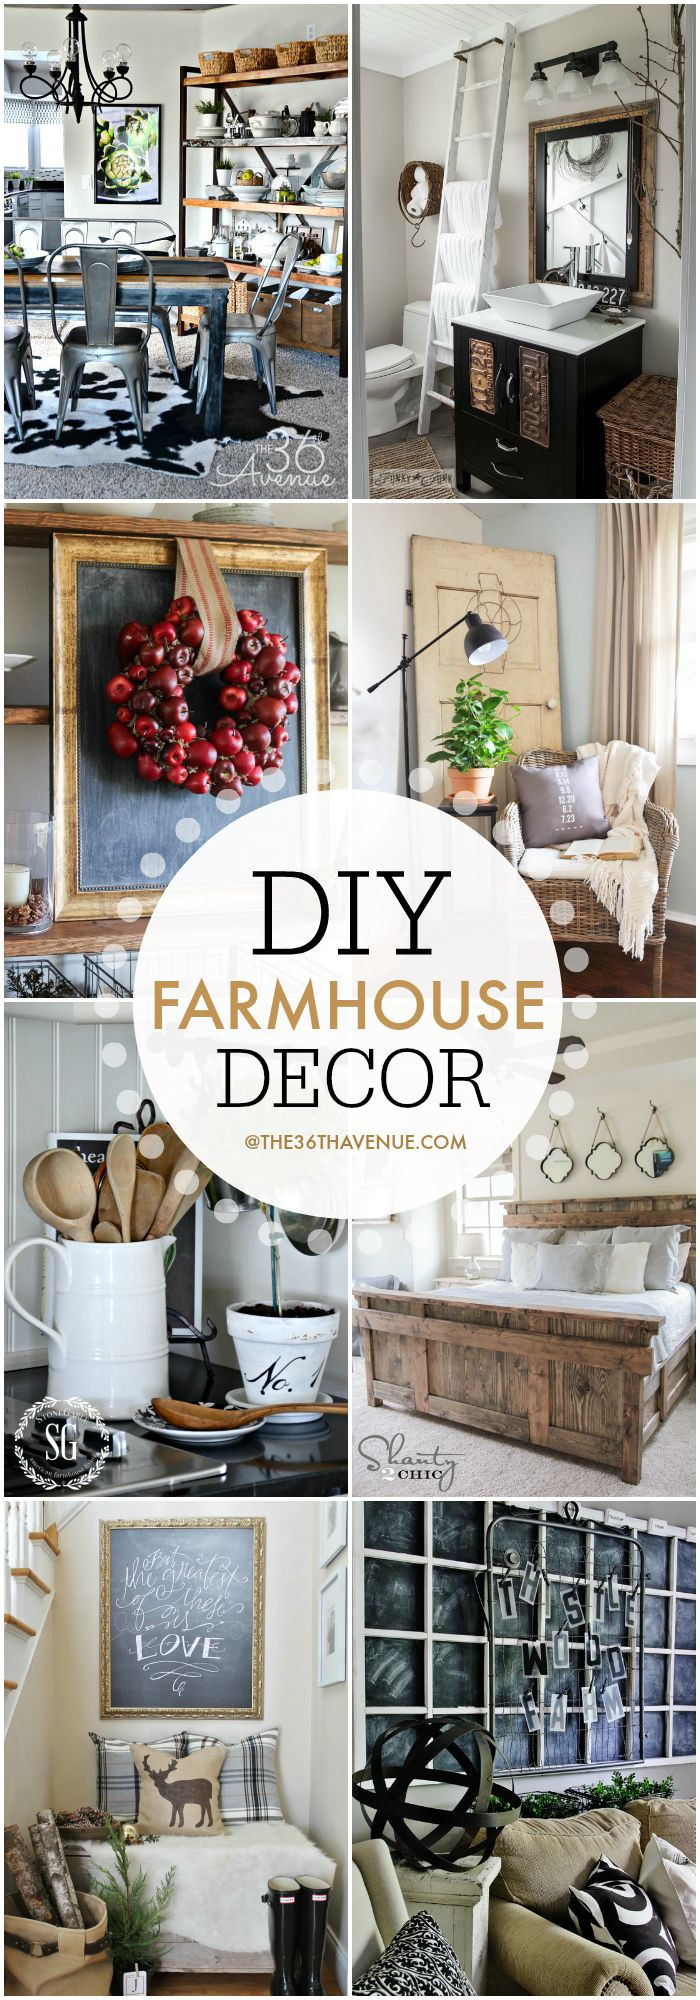 Farmhouse DIY Decor
 Farmhouse DIY Home Decor Ideas